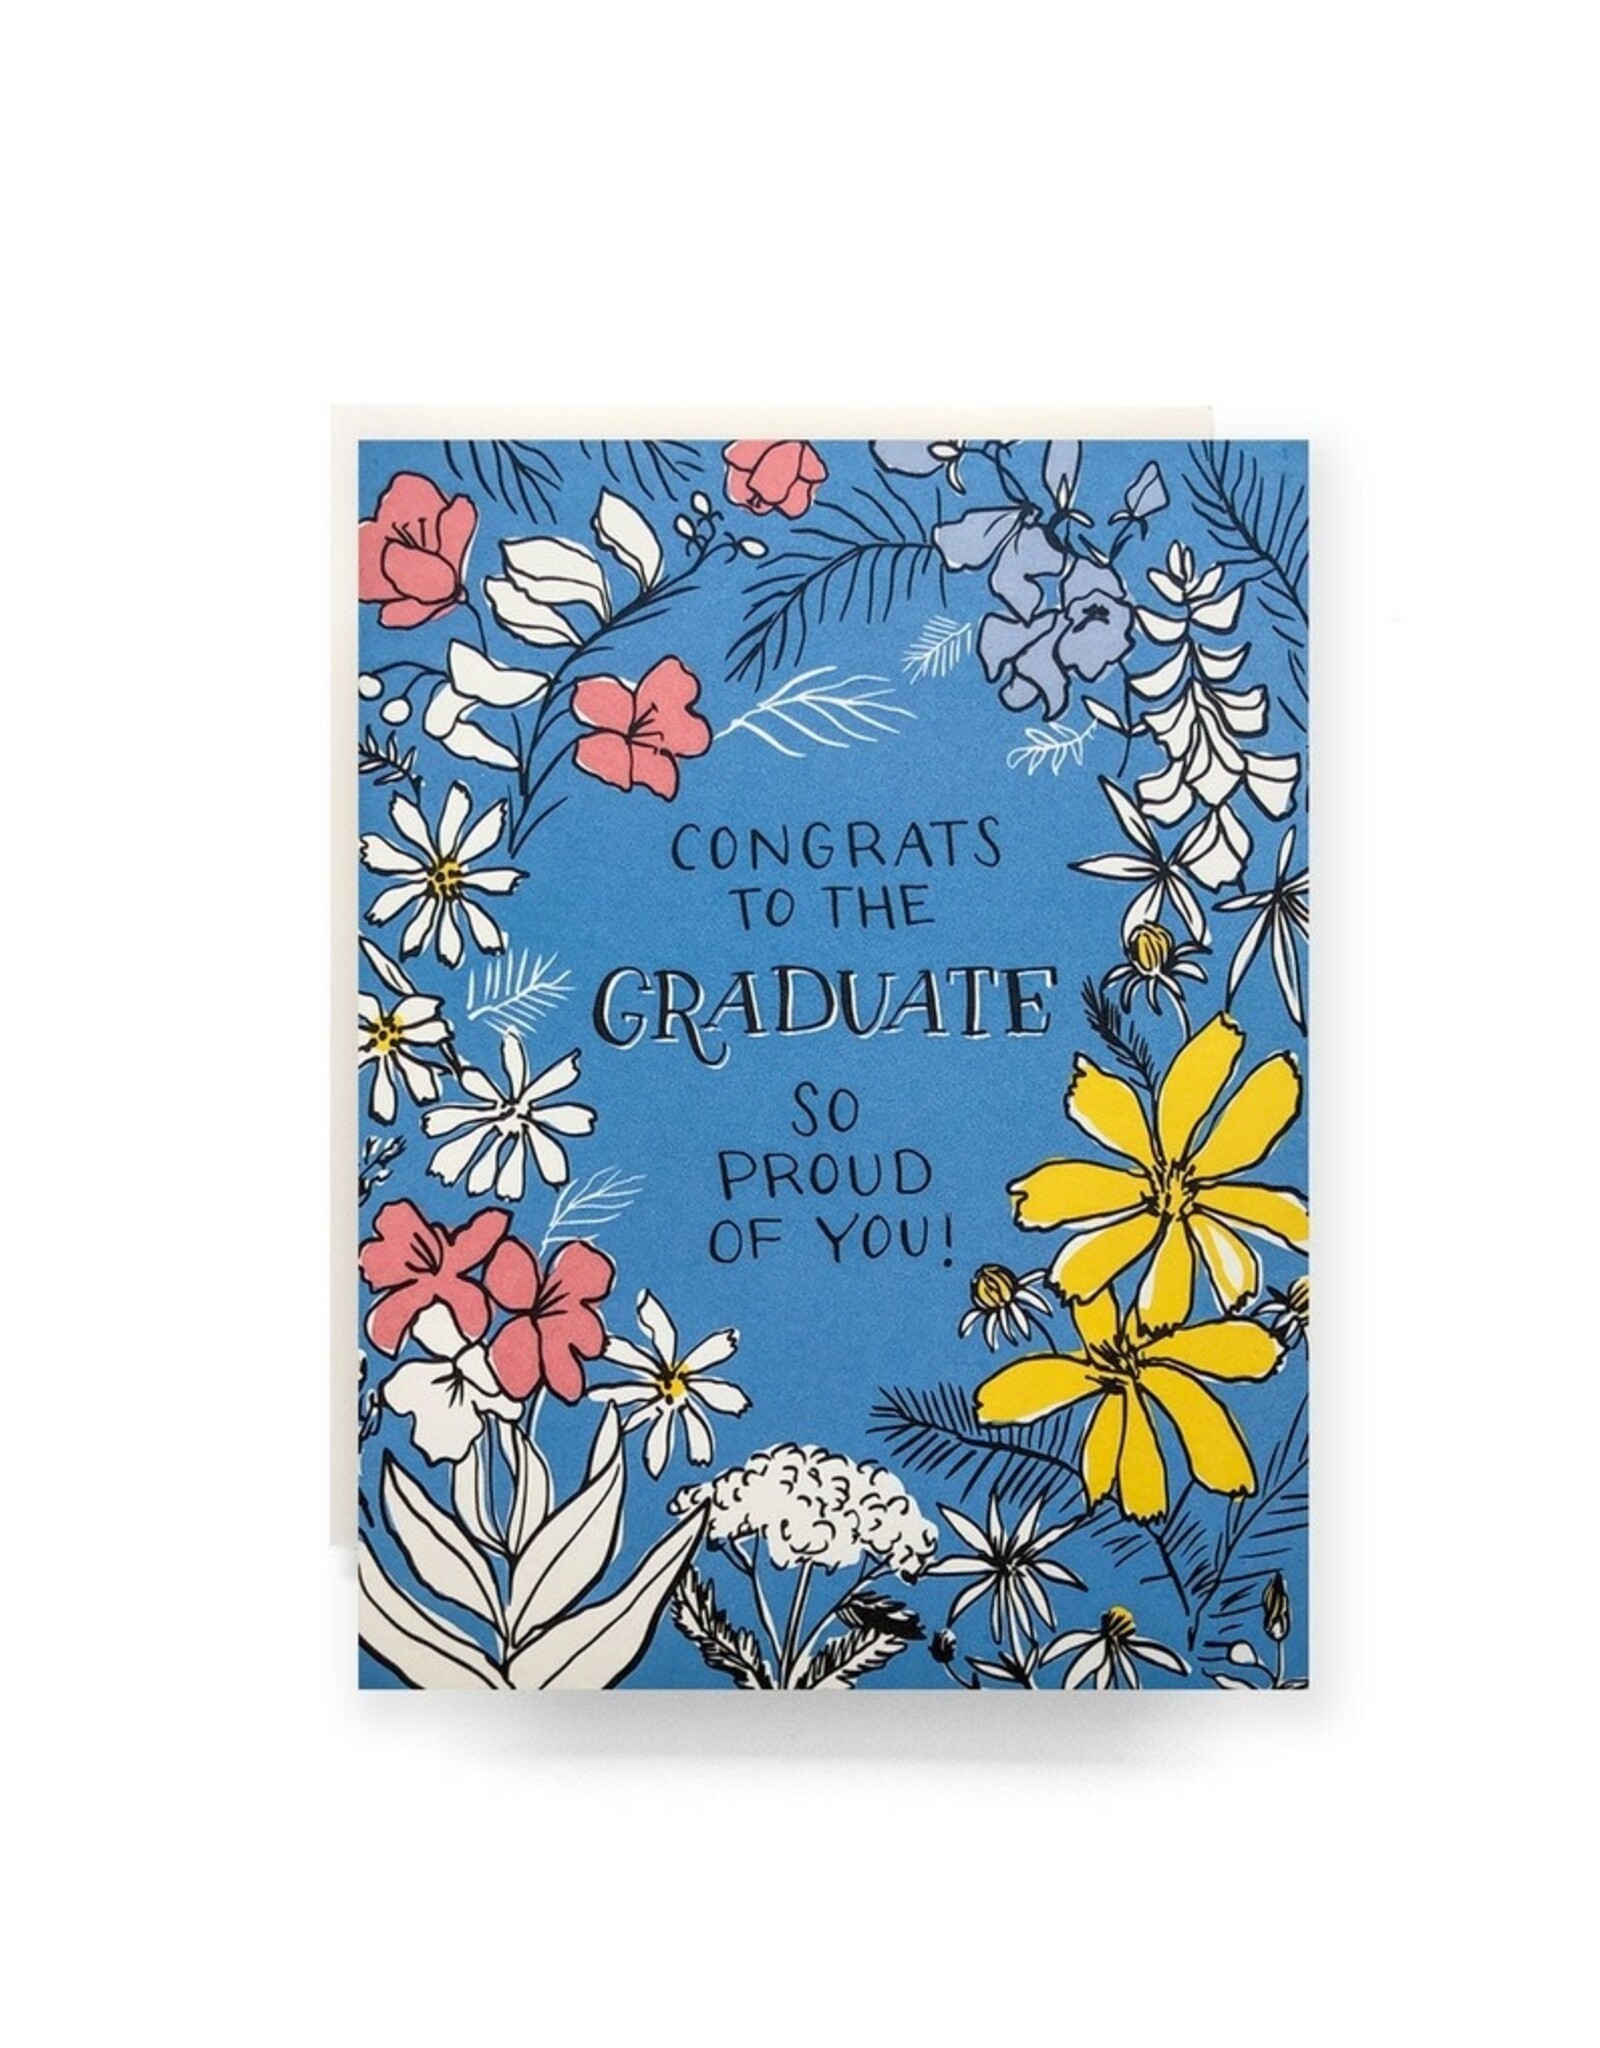 Antiquaria Floral ToileGraduate A2 Greeting Notecard